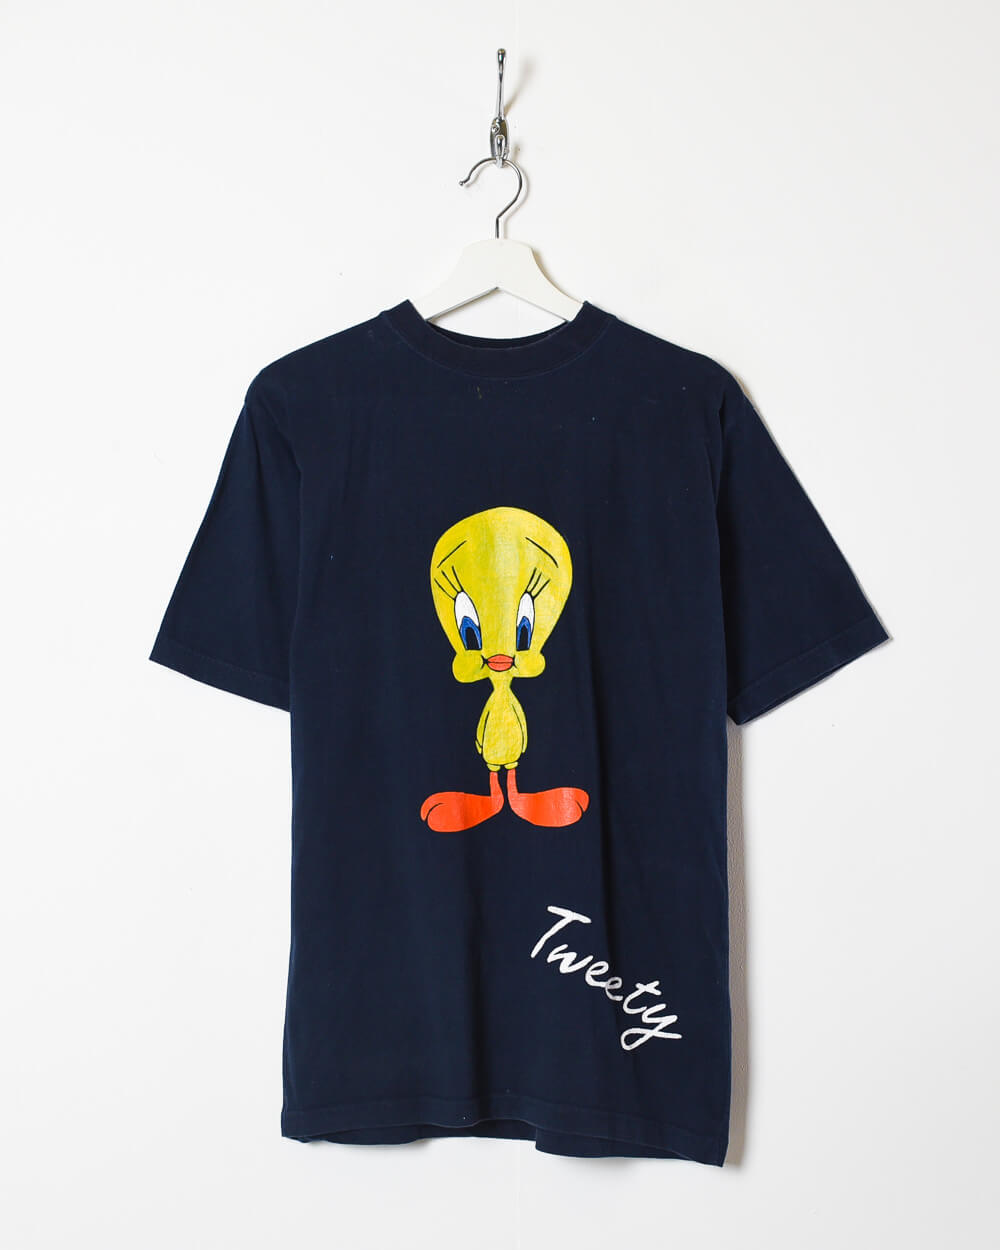 Navy Boomerang Tweety T-Shirt - Medium